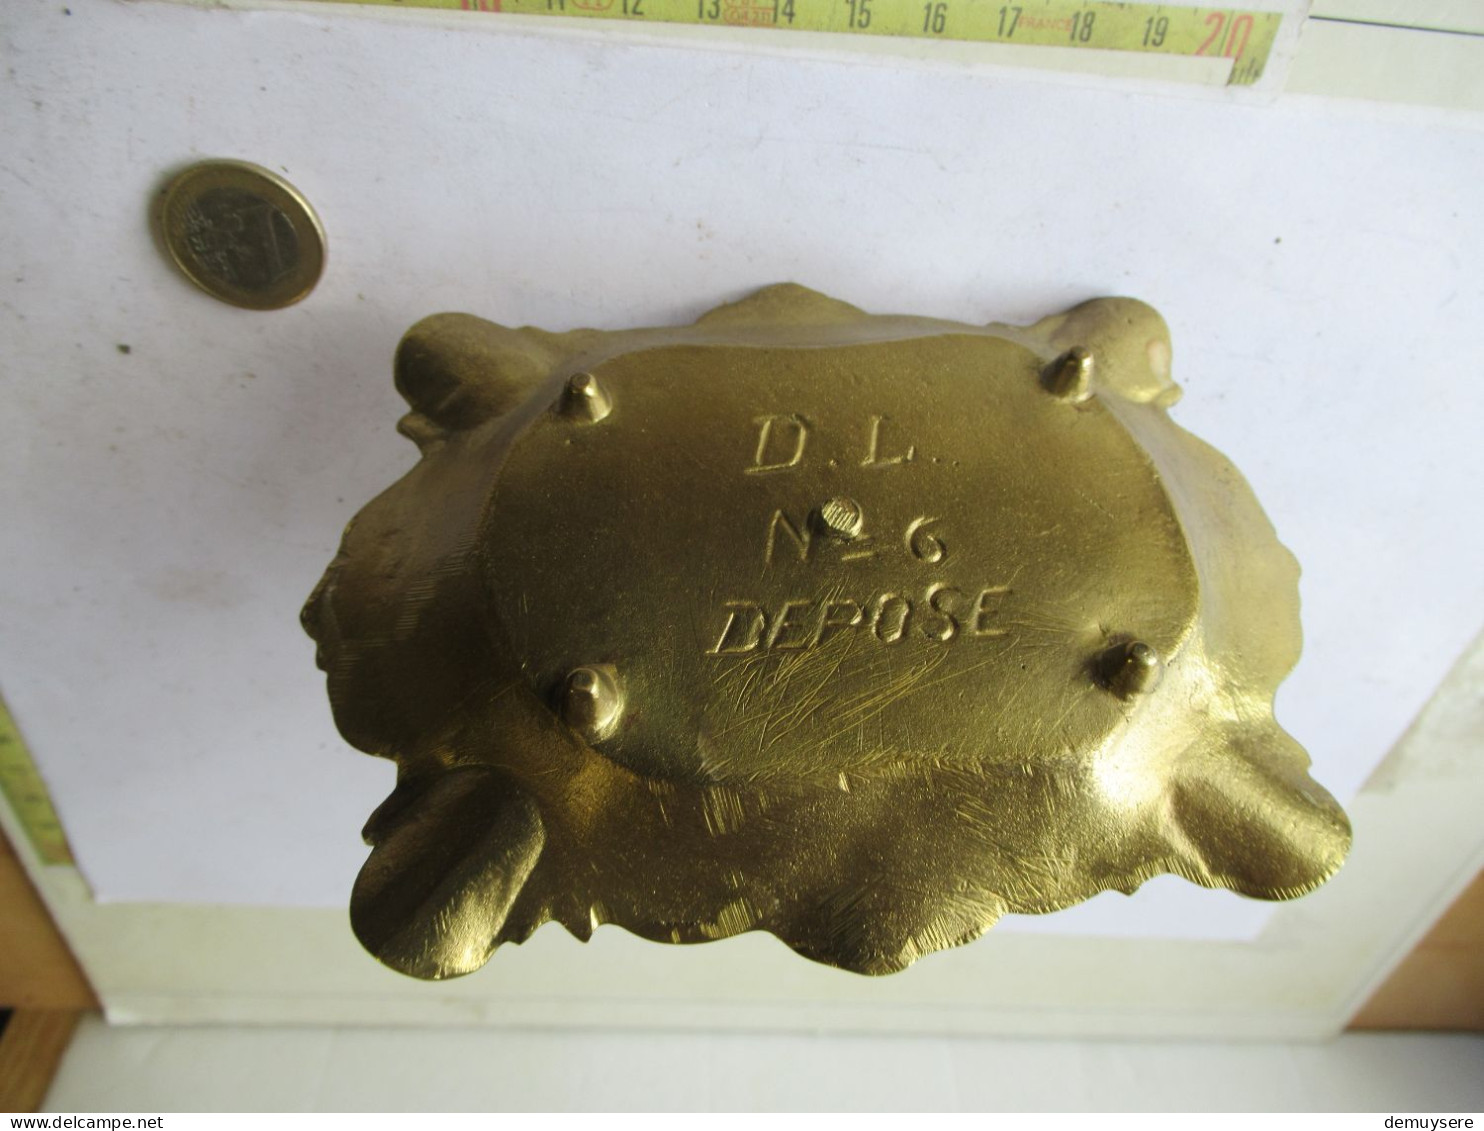 Lade 2000 - Bronzen Asbak Met Luciferhouder - Cendrier En Bronze Avec Porte Allumettes - 500 Gram - Bronzen